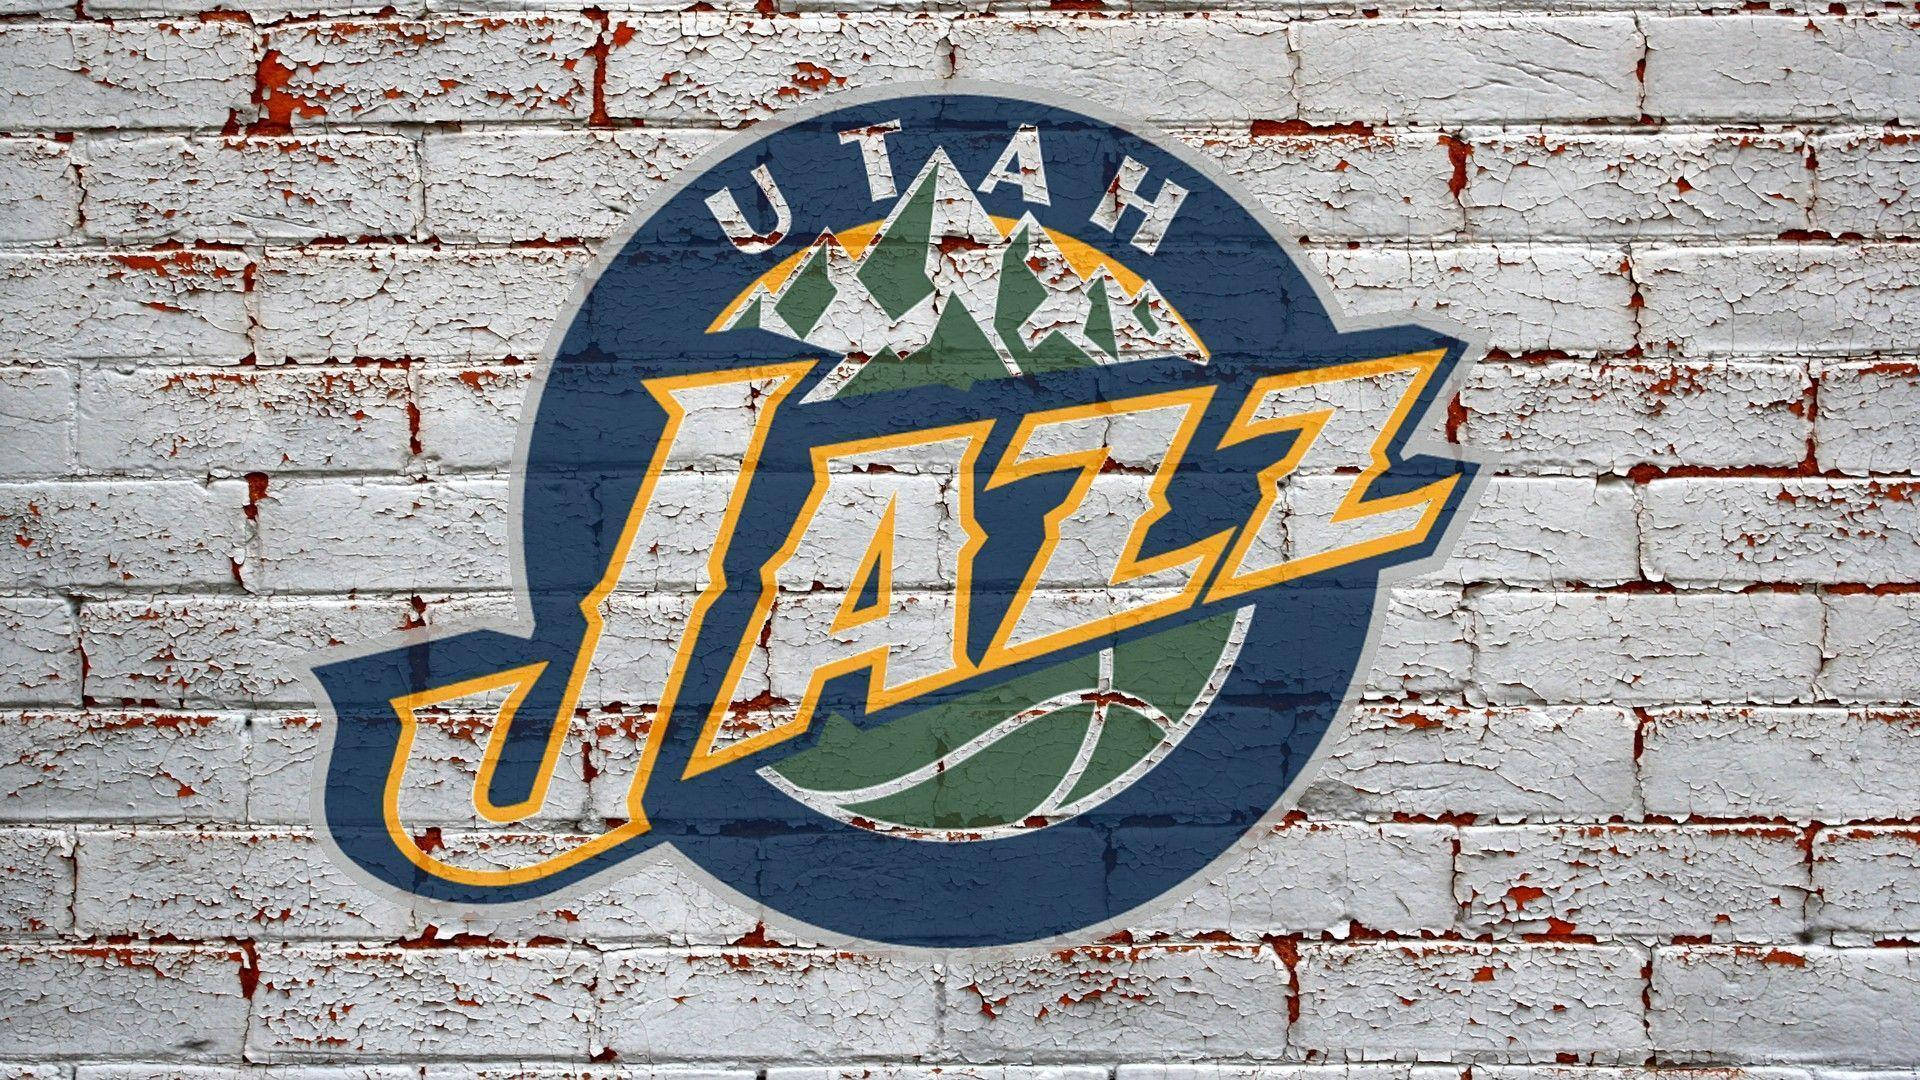 1920X1080 Utah Jazz Wallpaper and Background